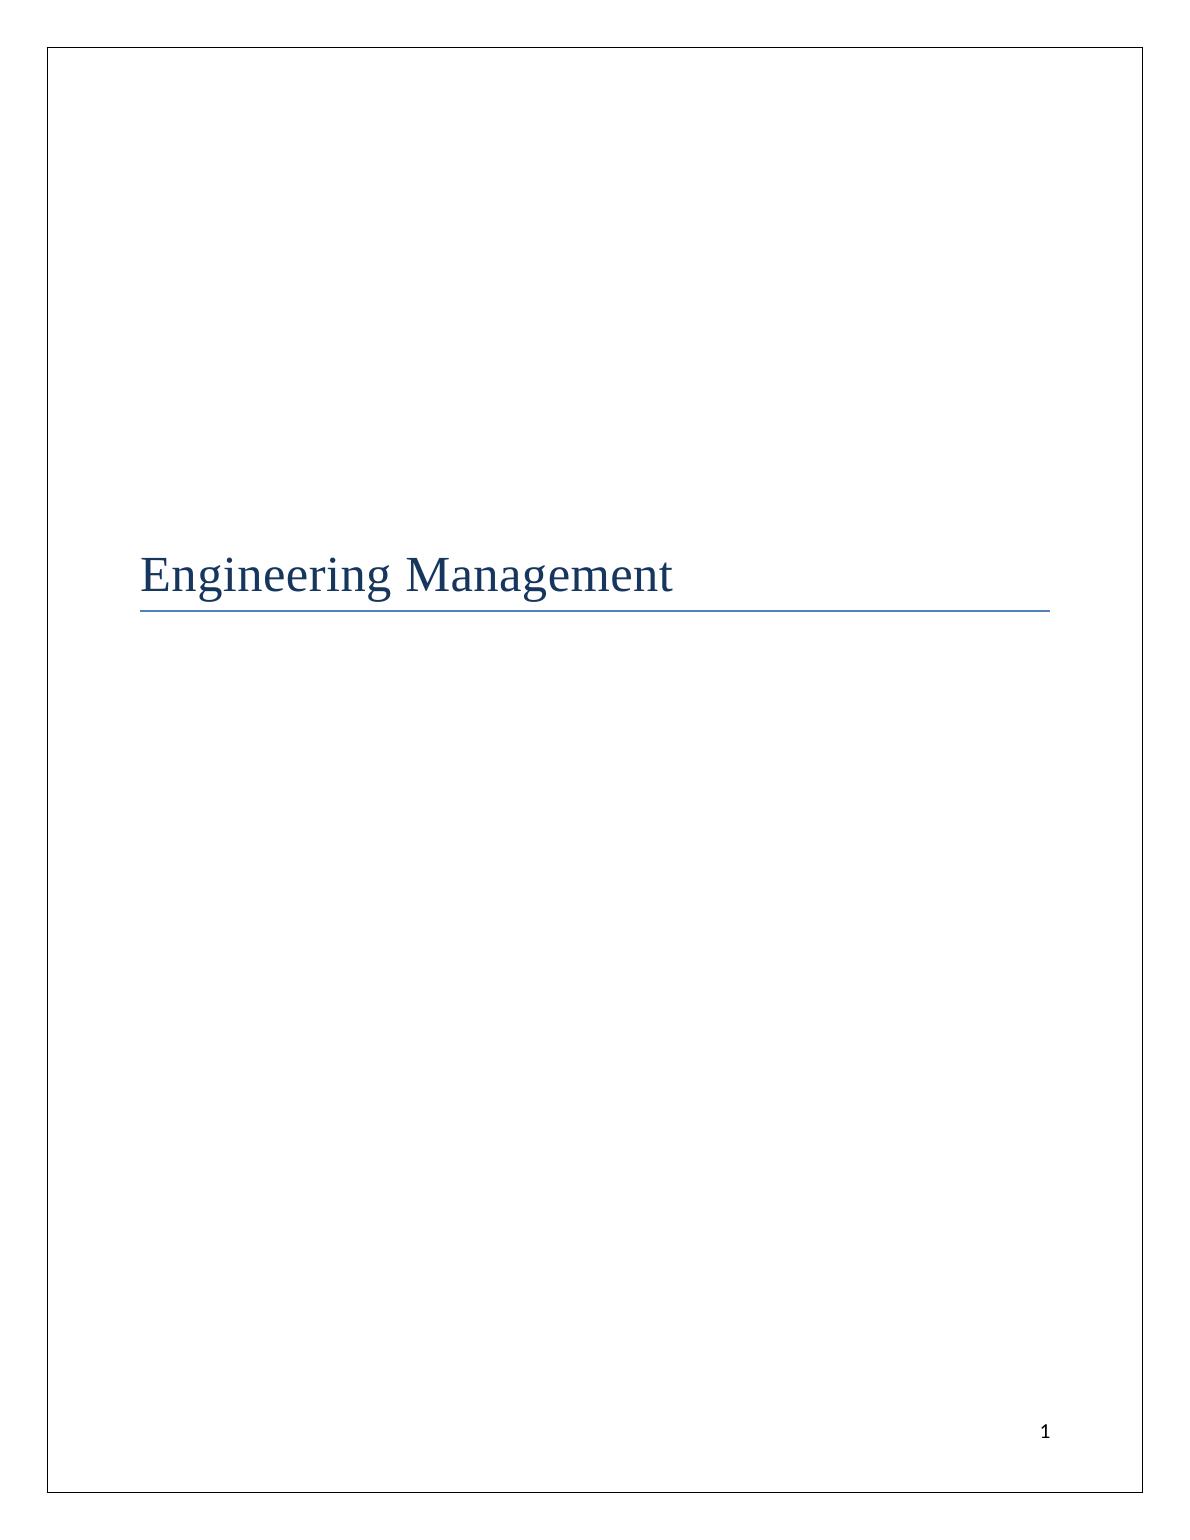 Engineering Management: Article - C04273_1